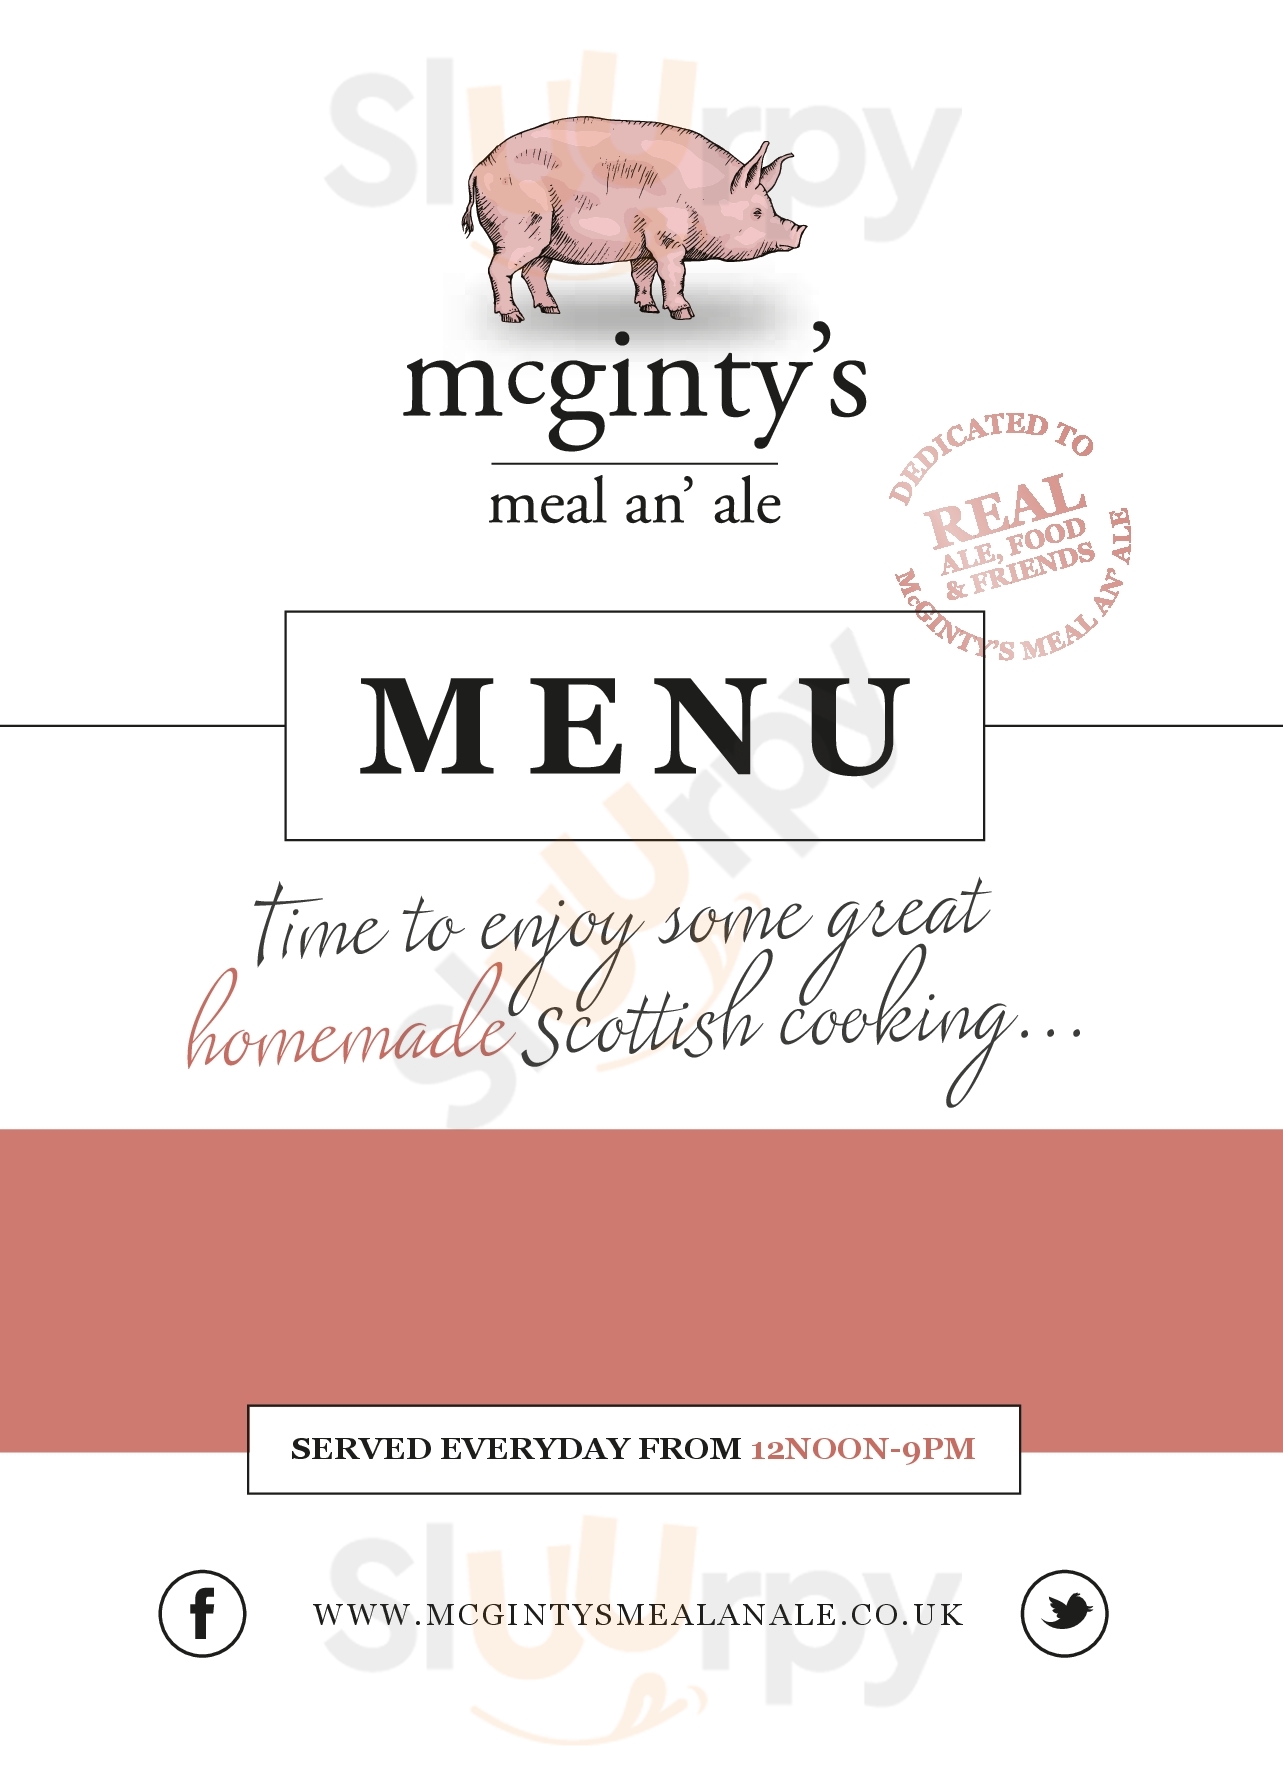 Mcginty's Meal An' Ale Aberdeen Menu - 1